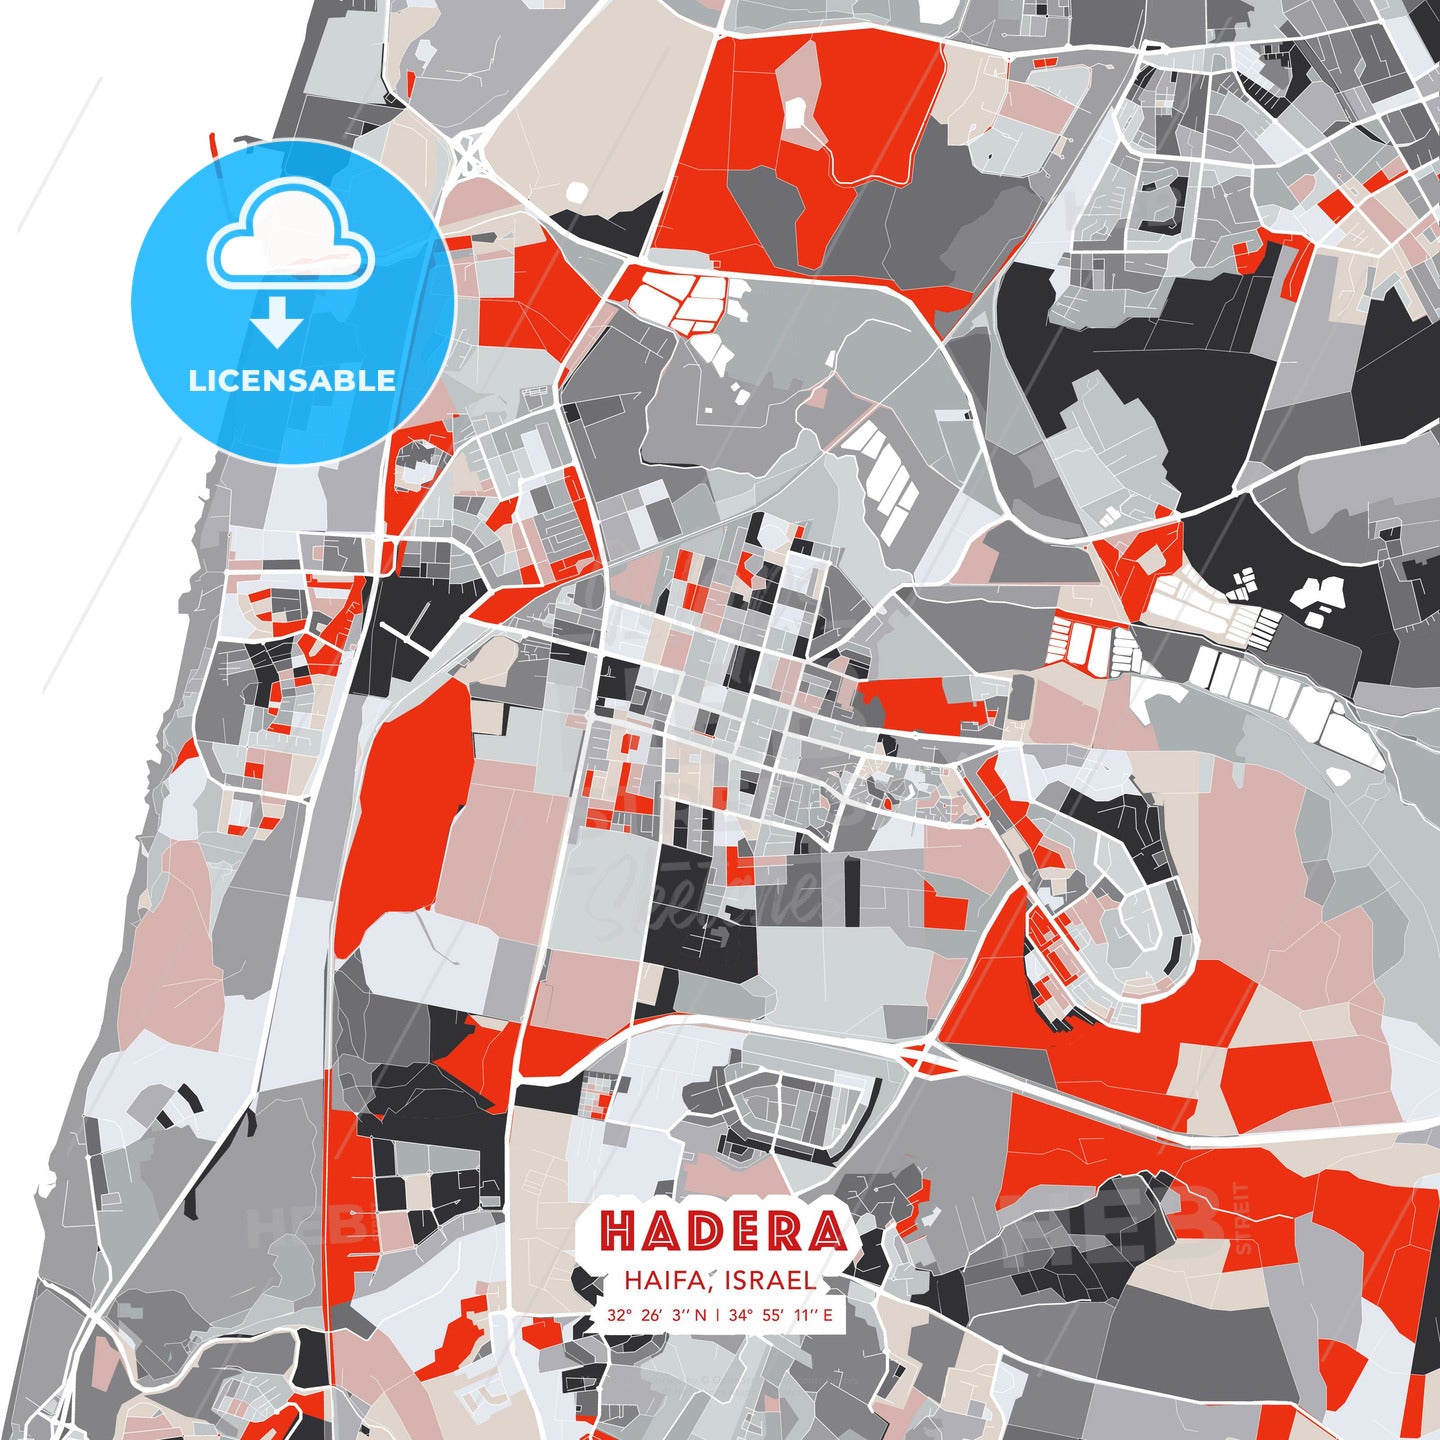 Hadera, Haifa, Israel, modern map - HEBSTREITS Sketches